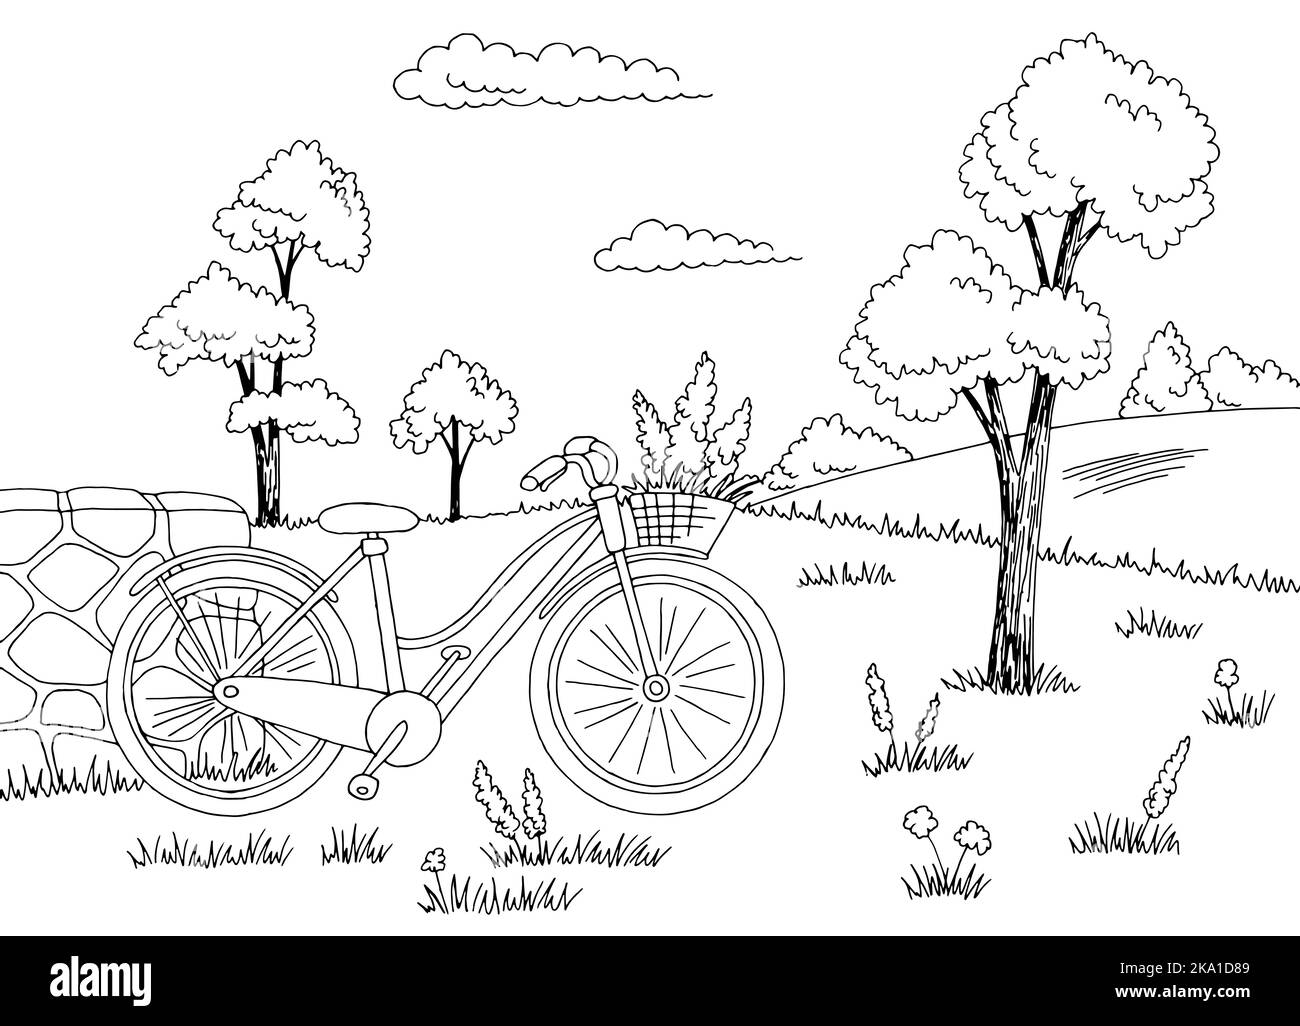 Fahrrad im Feld Grafik schwarz weiß Landschaft Skizze Illustration Vektor Stock Vektor